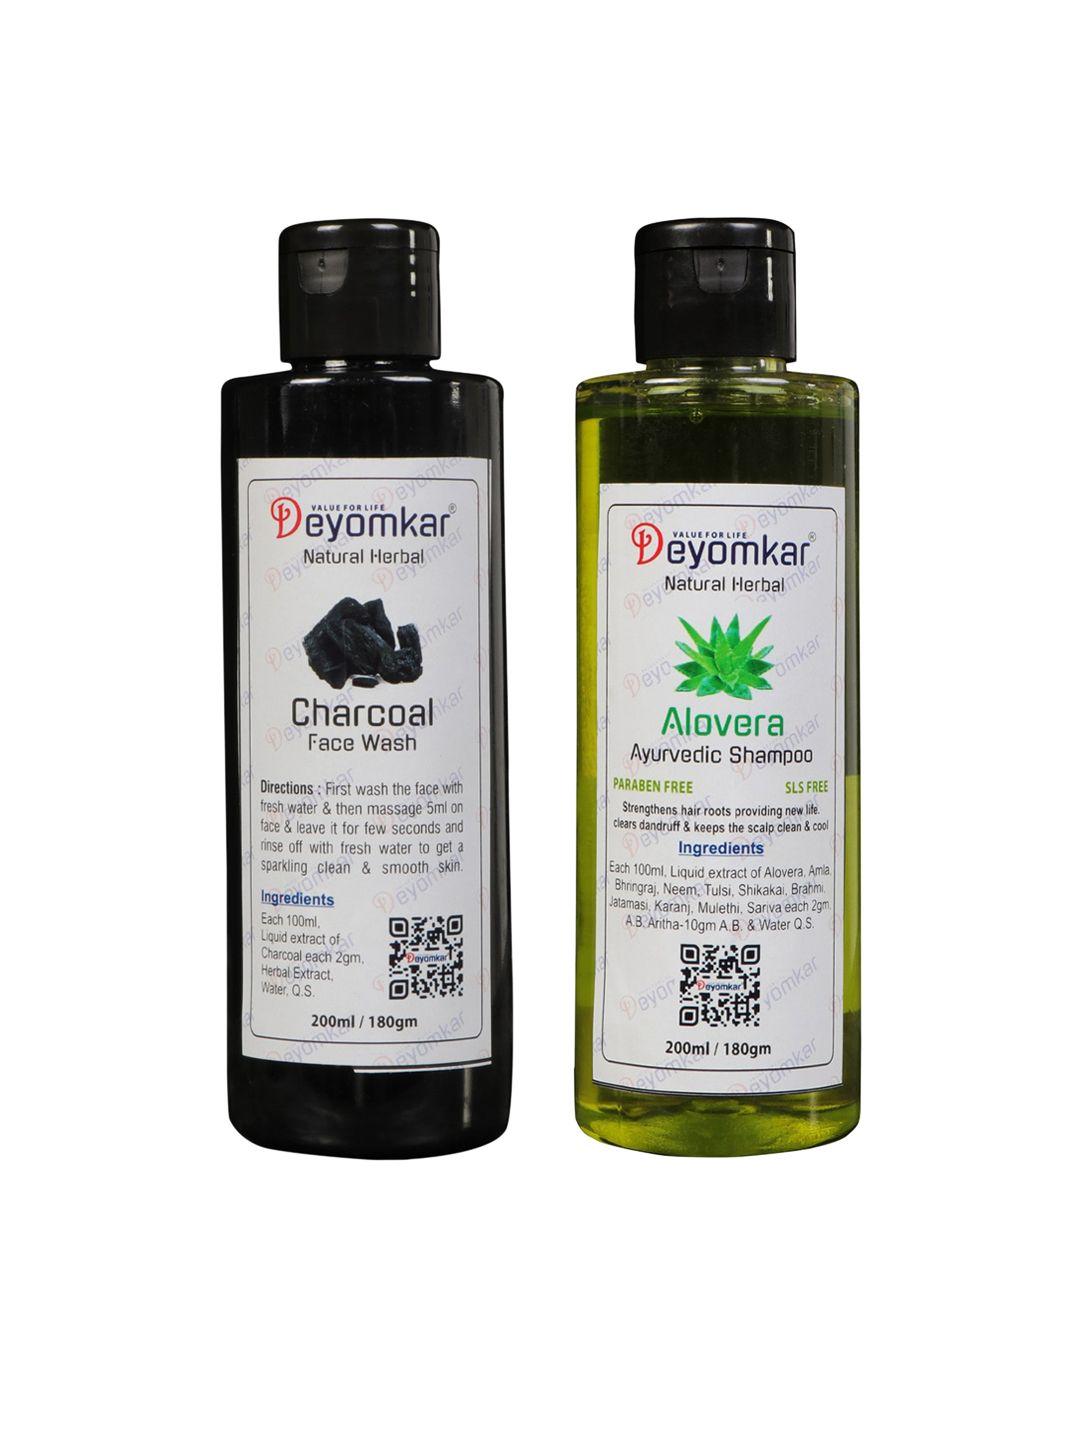 deyomkar natural herbal alovera shampoo with charcoal face wash